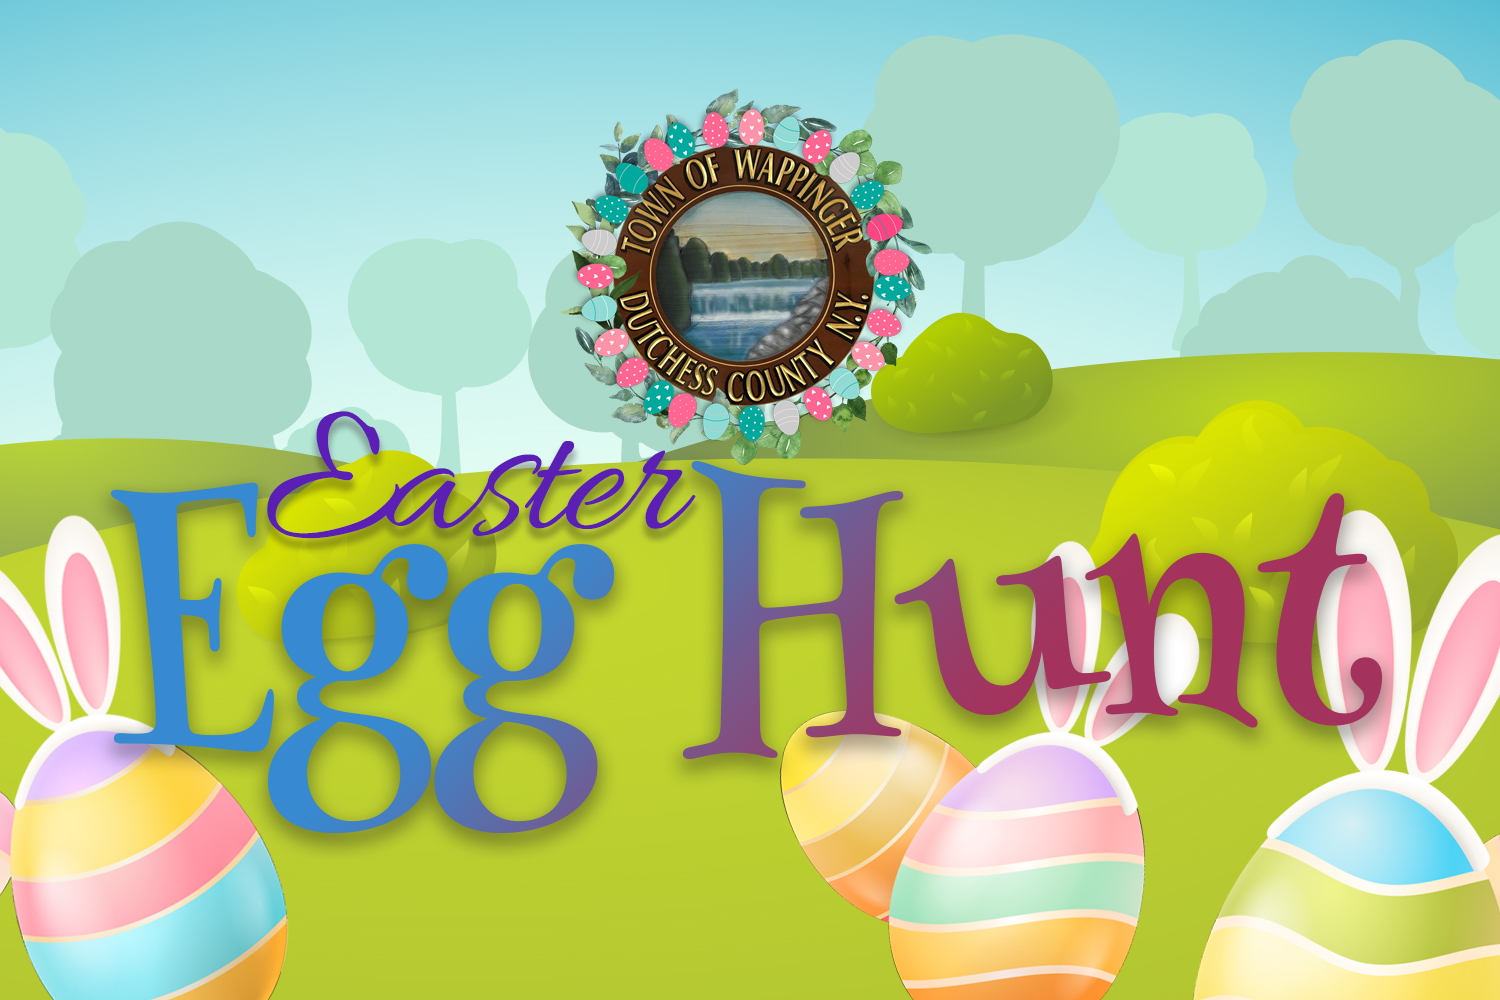 https://townofwappingerny.gov/wp-content/uploads/2023/03/2023-Town-of-Wappinger-Easter-Egg-Hunt-_-1500x1000-1.jpg